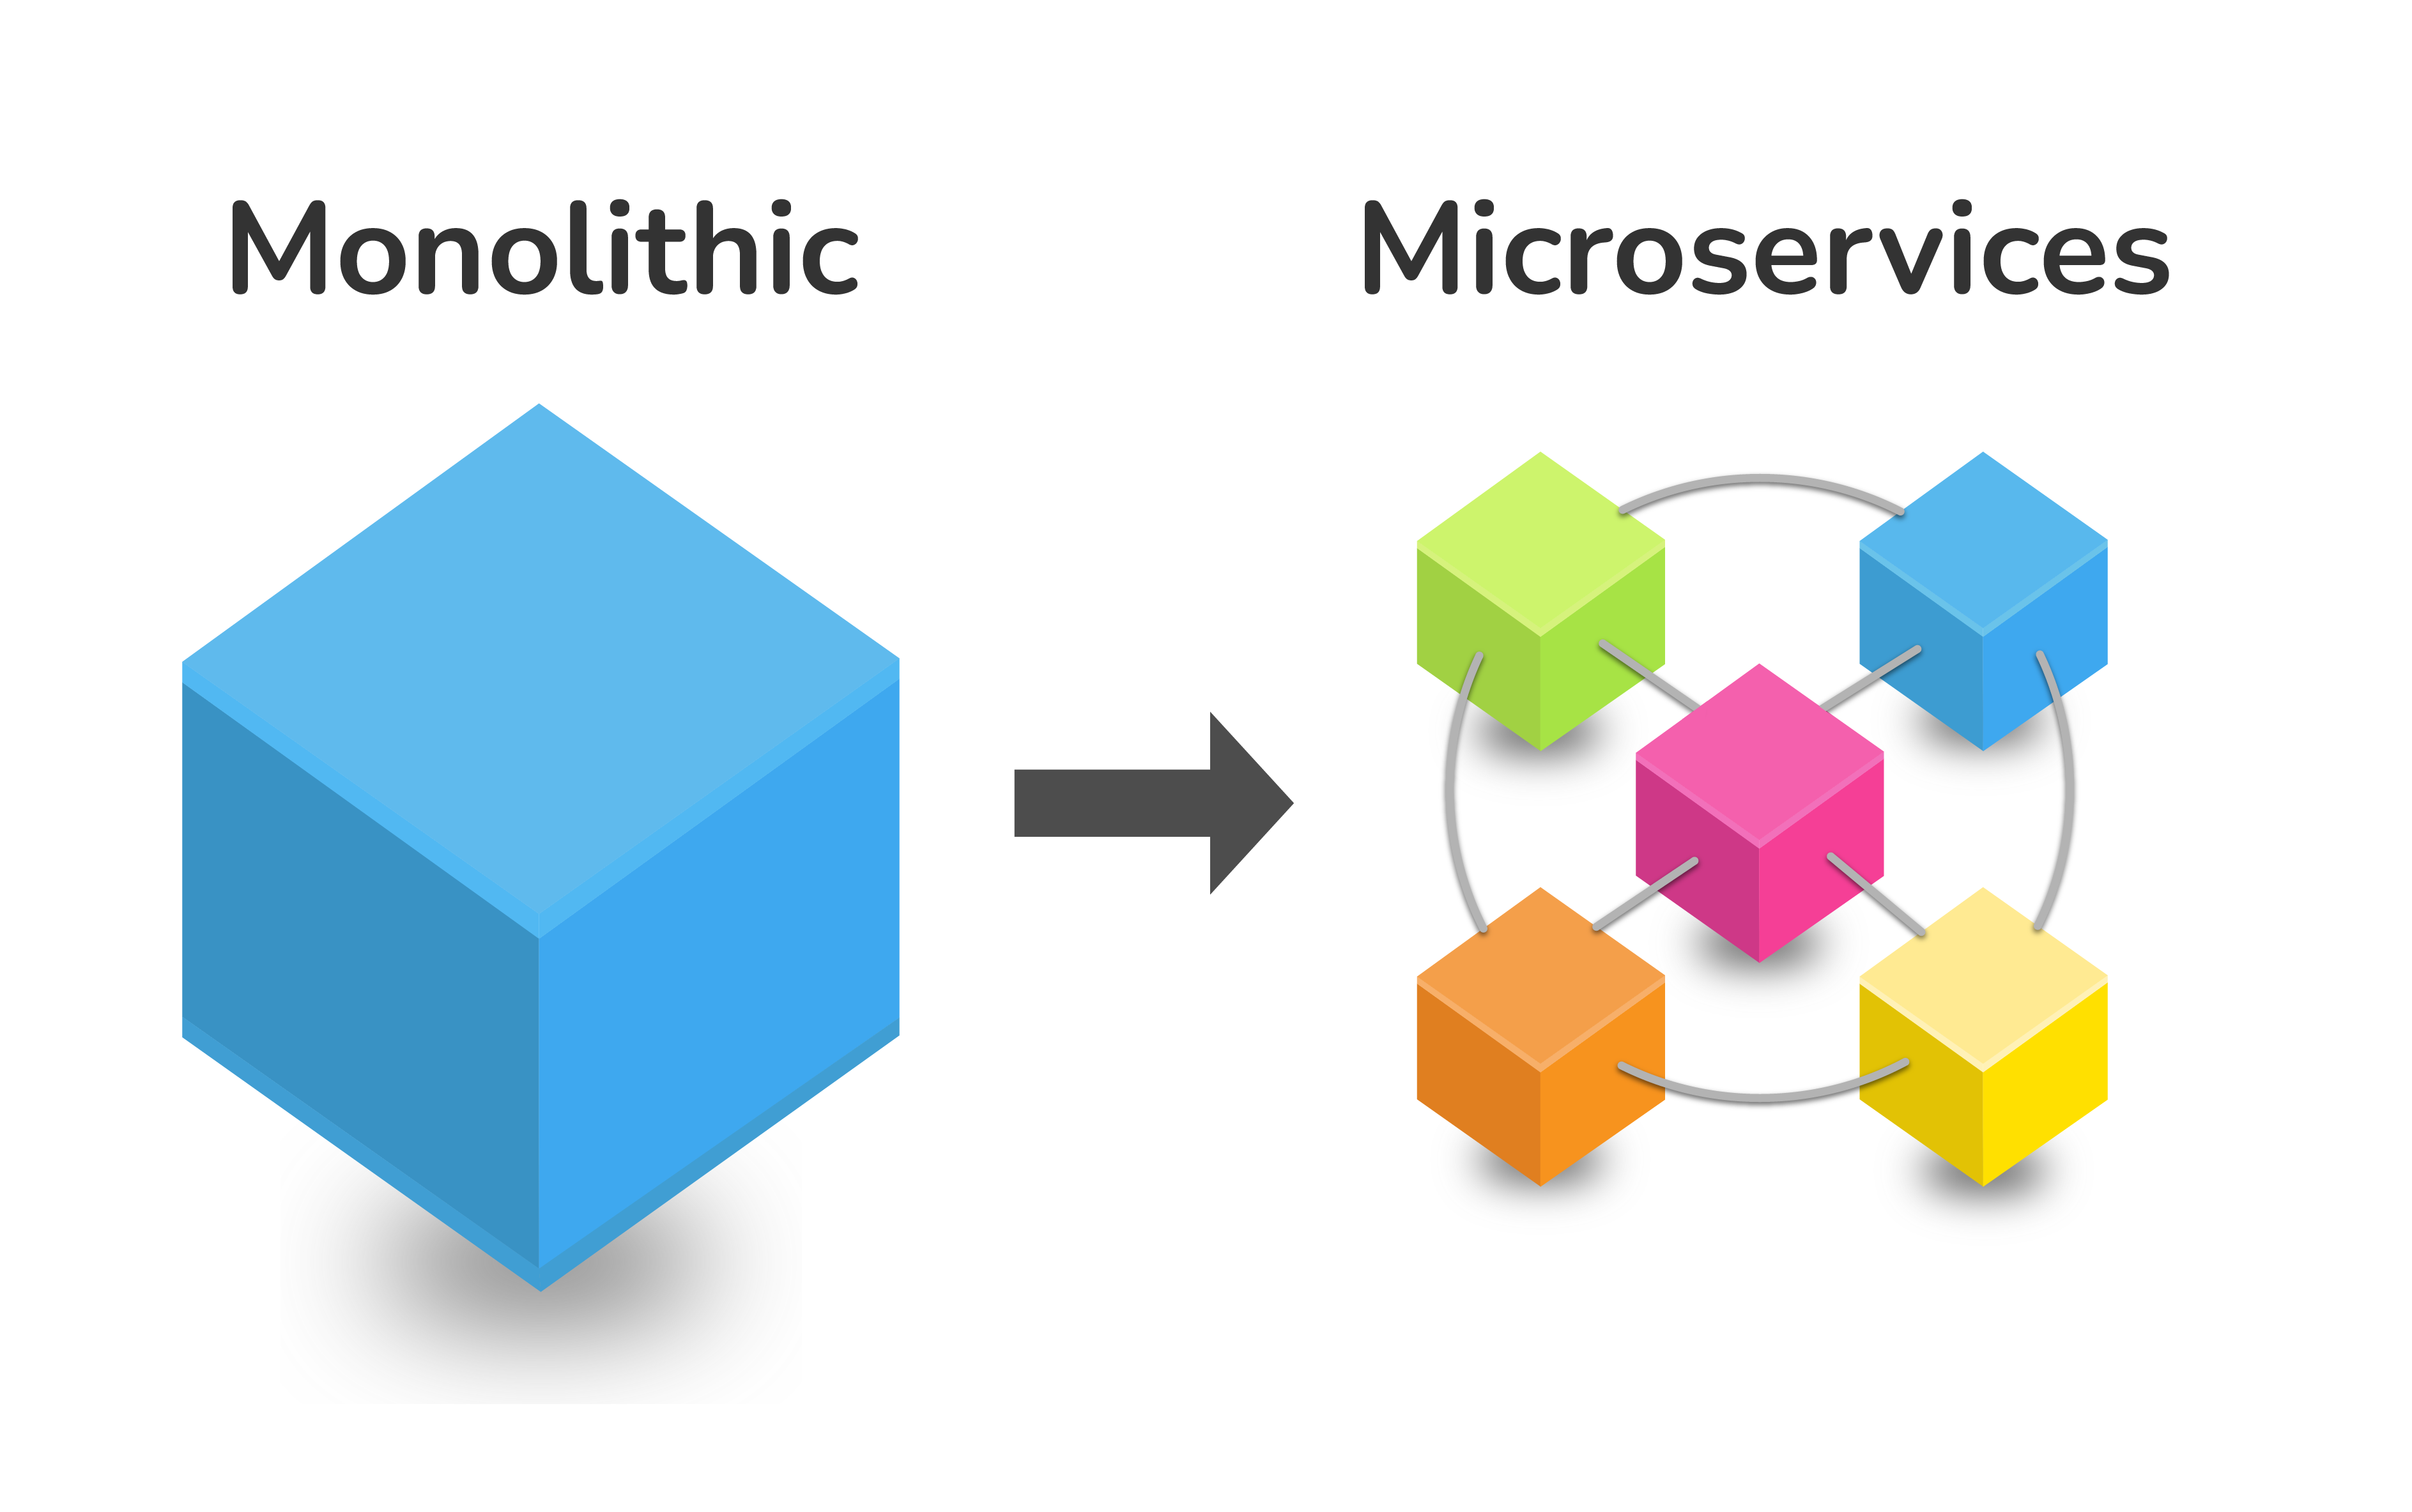 Microservice architecture. Микросервисы. Microservices Architecture. Микросервисы иконка. Шестигранная архитектура микросервисов.